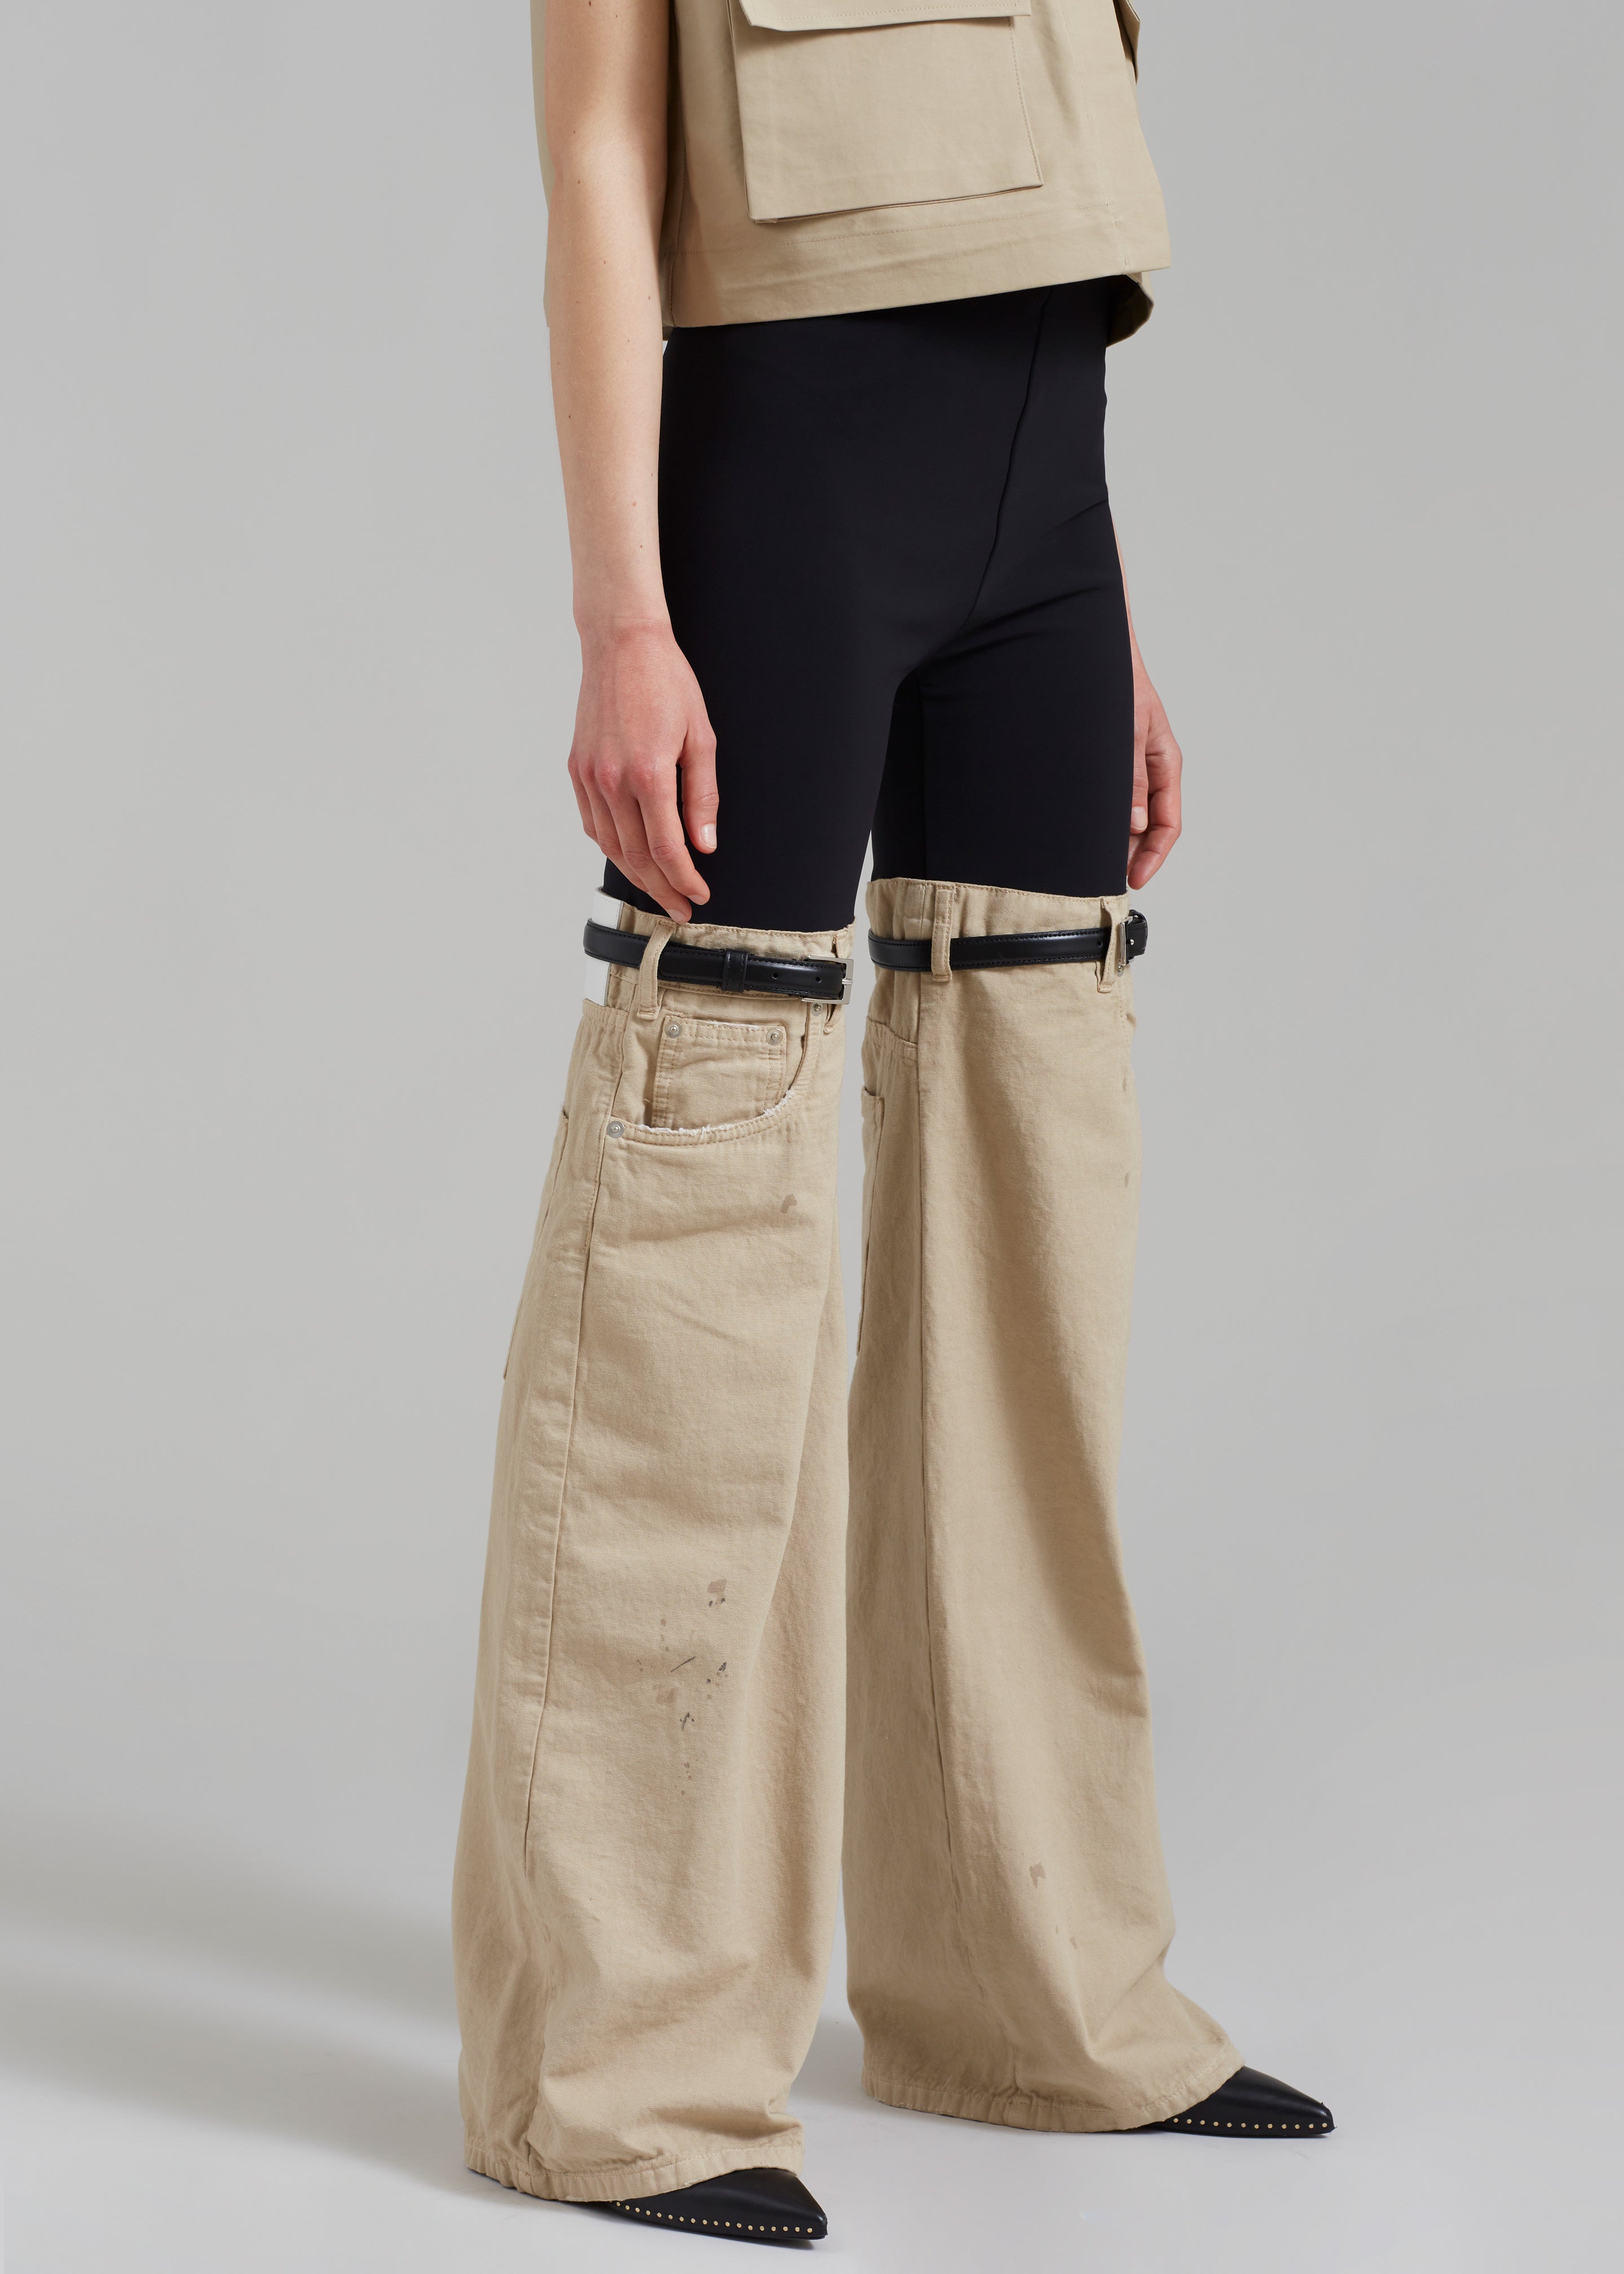 Coperni Hybrid Denim Trousers - Black/Beige - 2